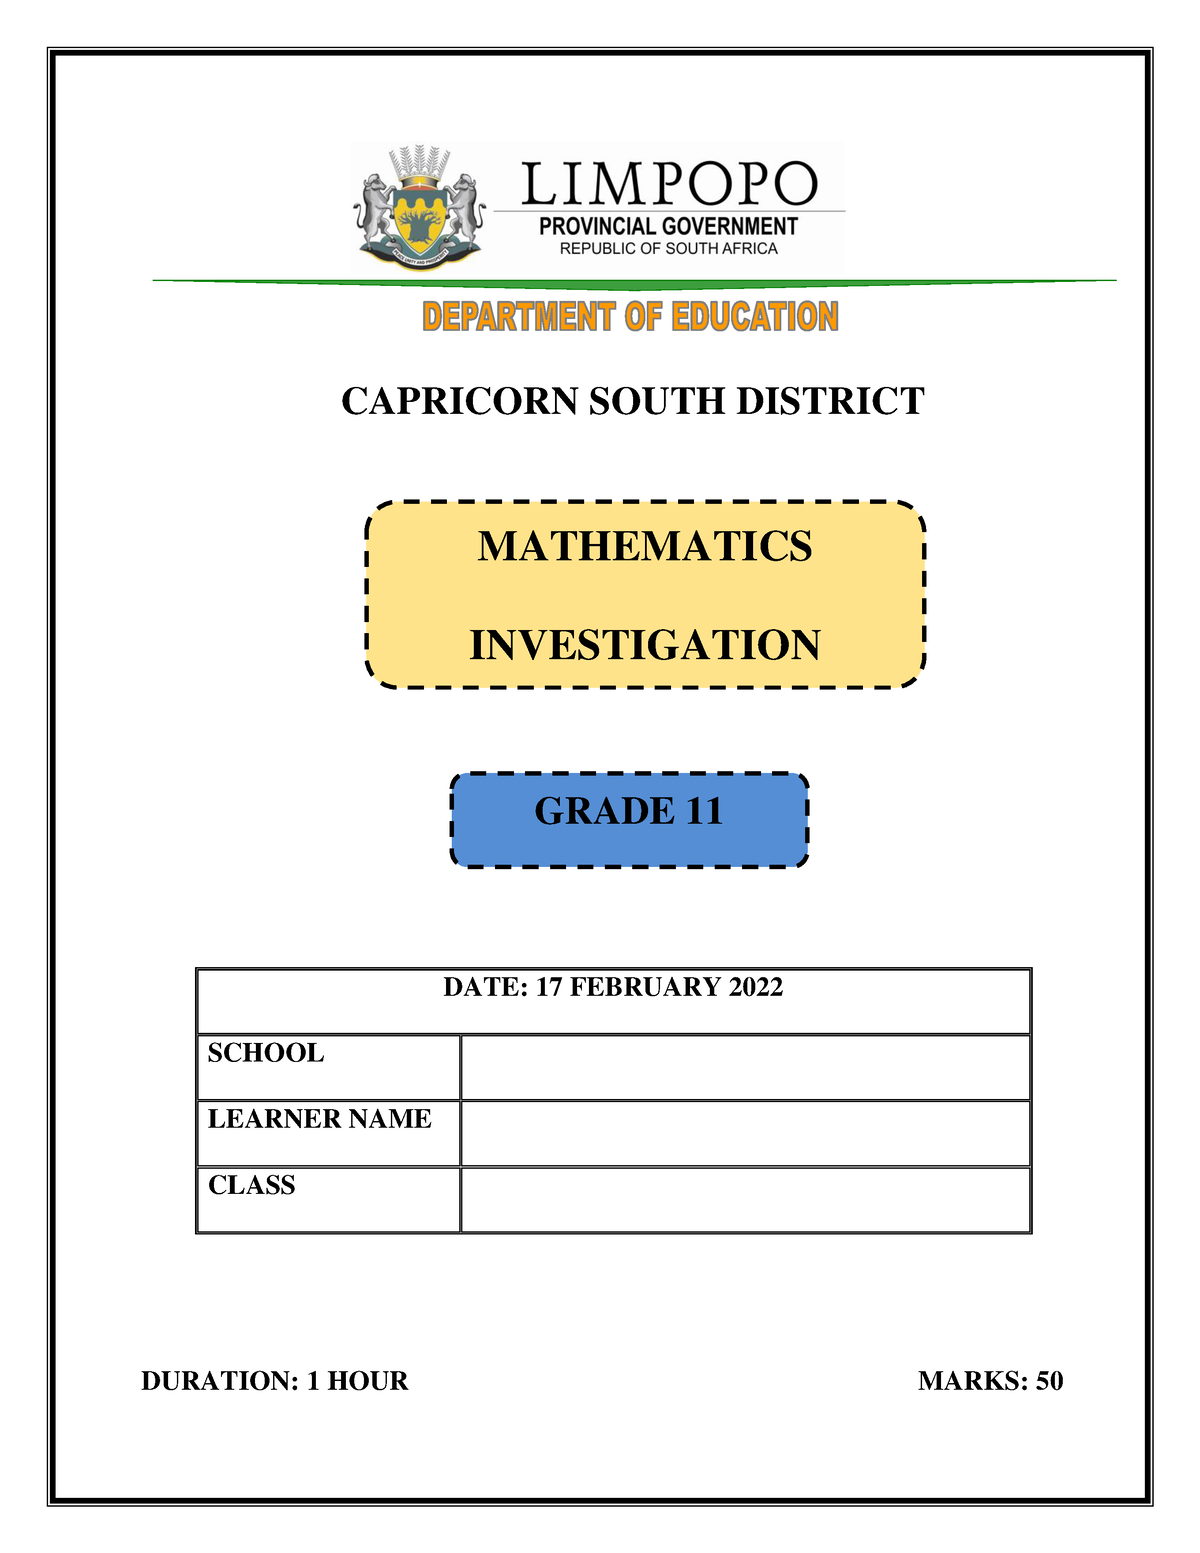 capricorn south district mathematics assignment grade 11